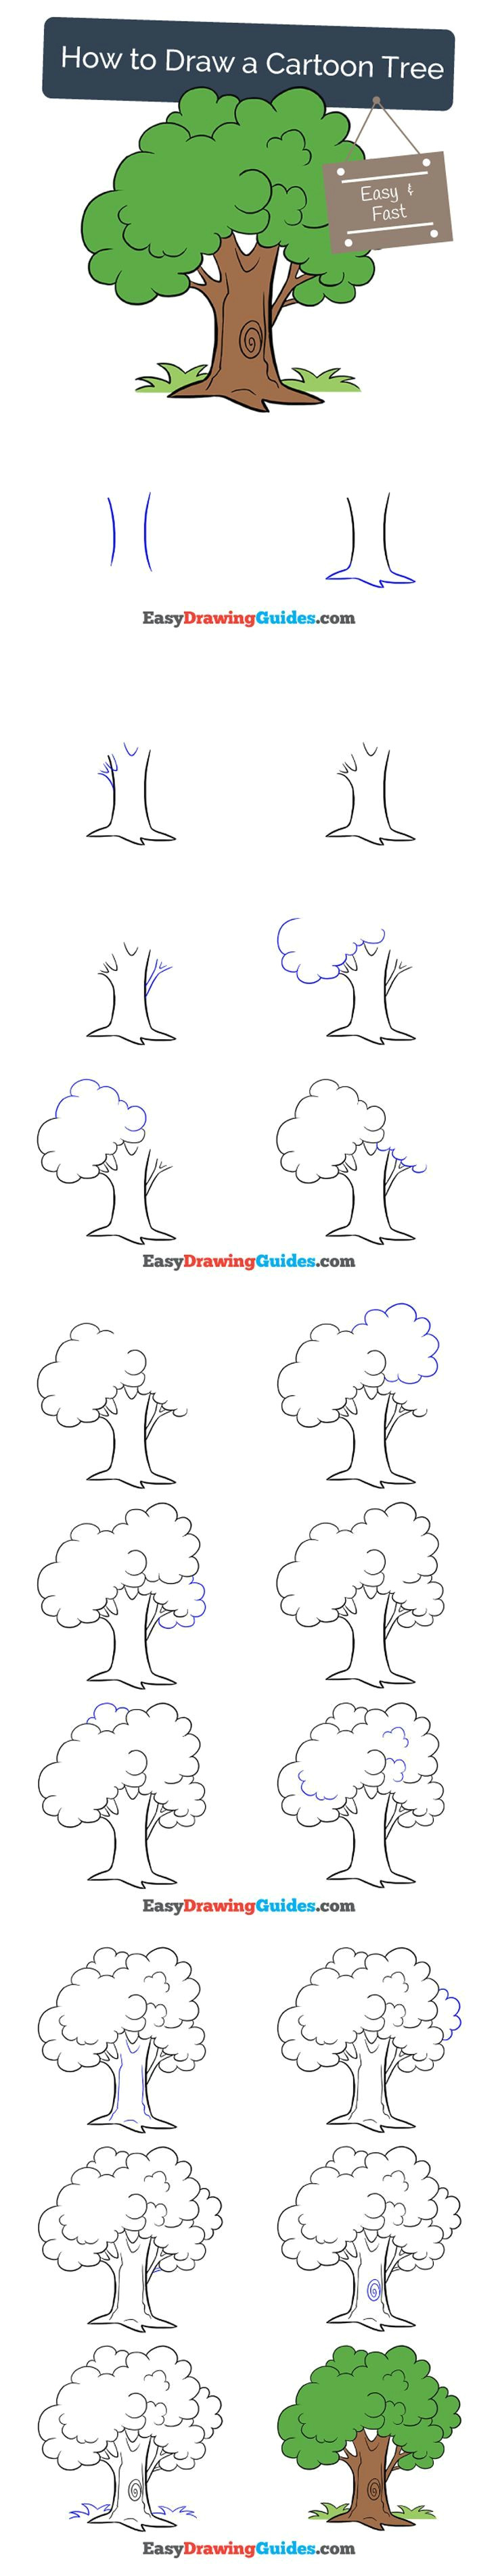 Drawing A Cartoon Tree How to Draw A Cartoon Tree Drawings Drawings Drawing Tutorials